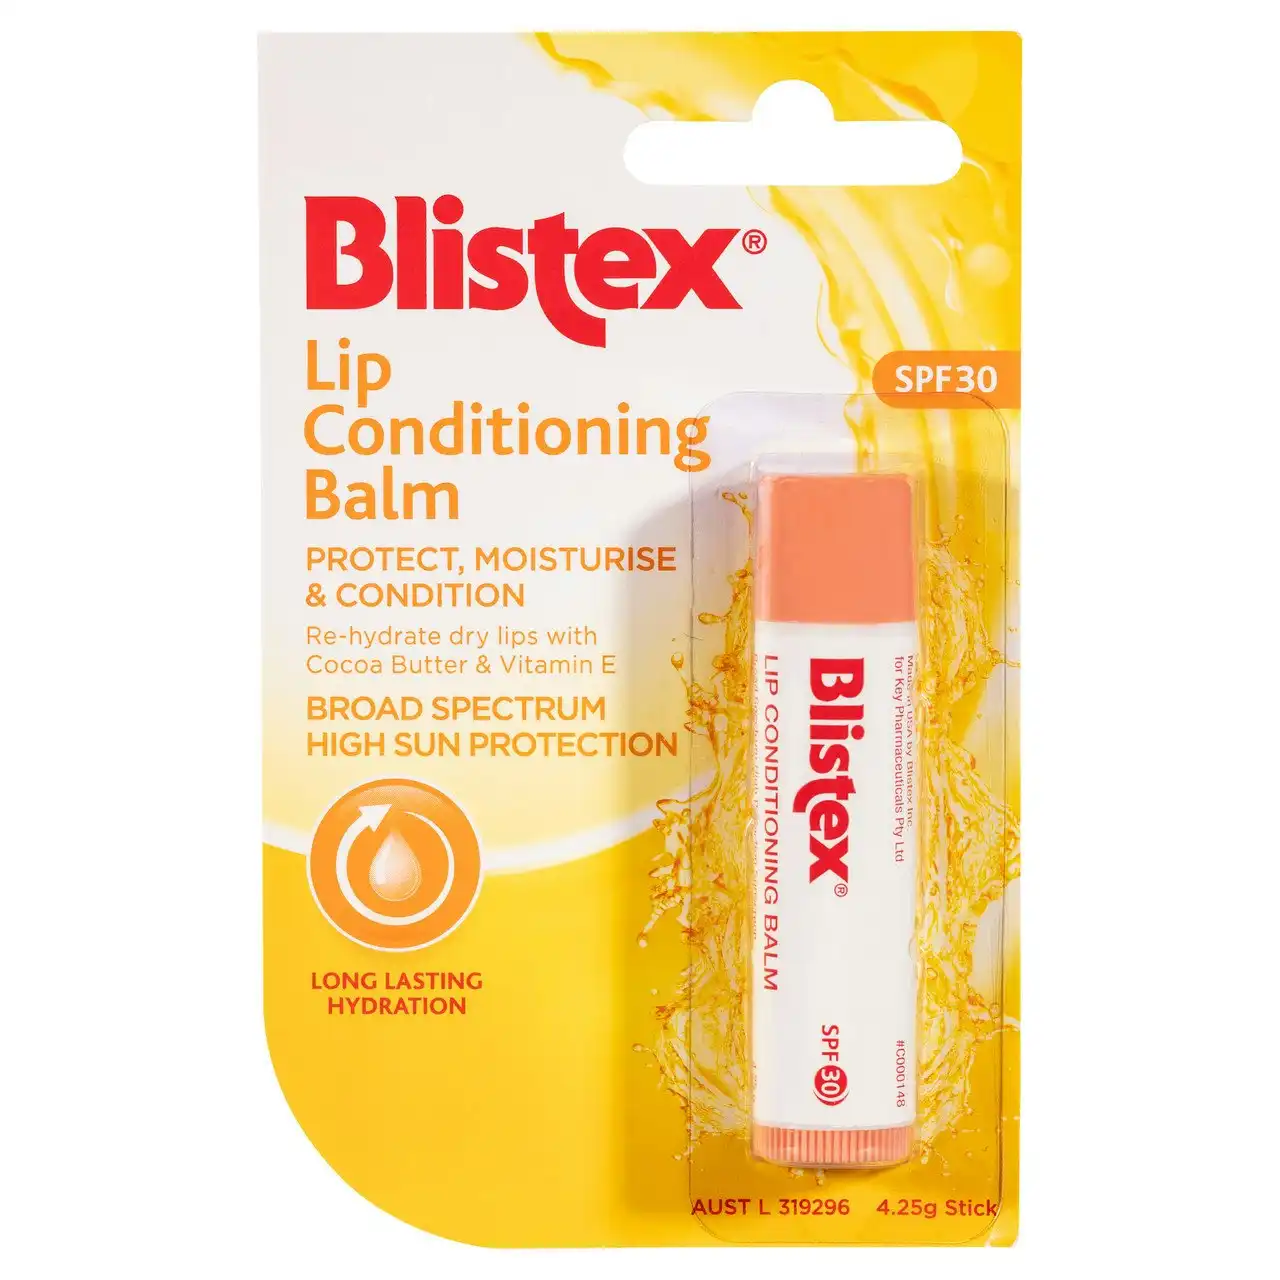 Blistex(R) Lip Conditioning Balm 4.25gm SPF 30